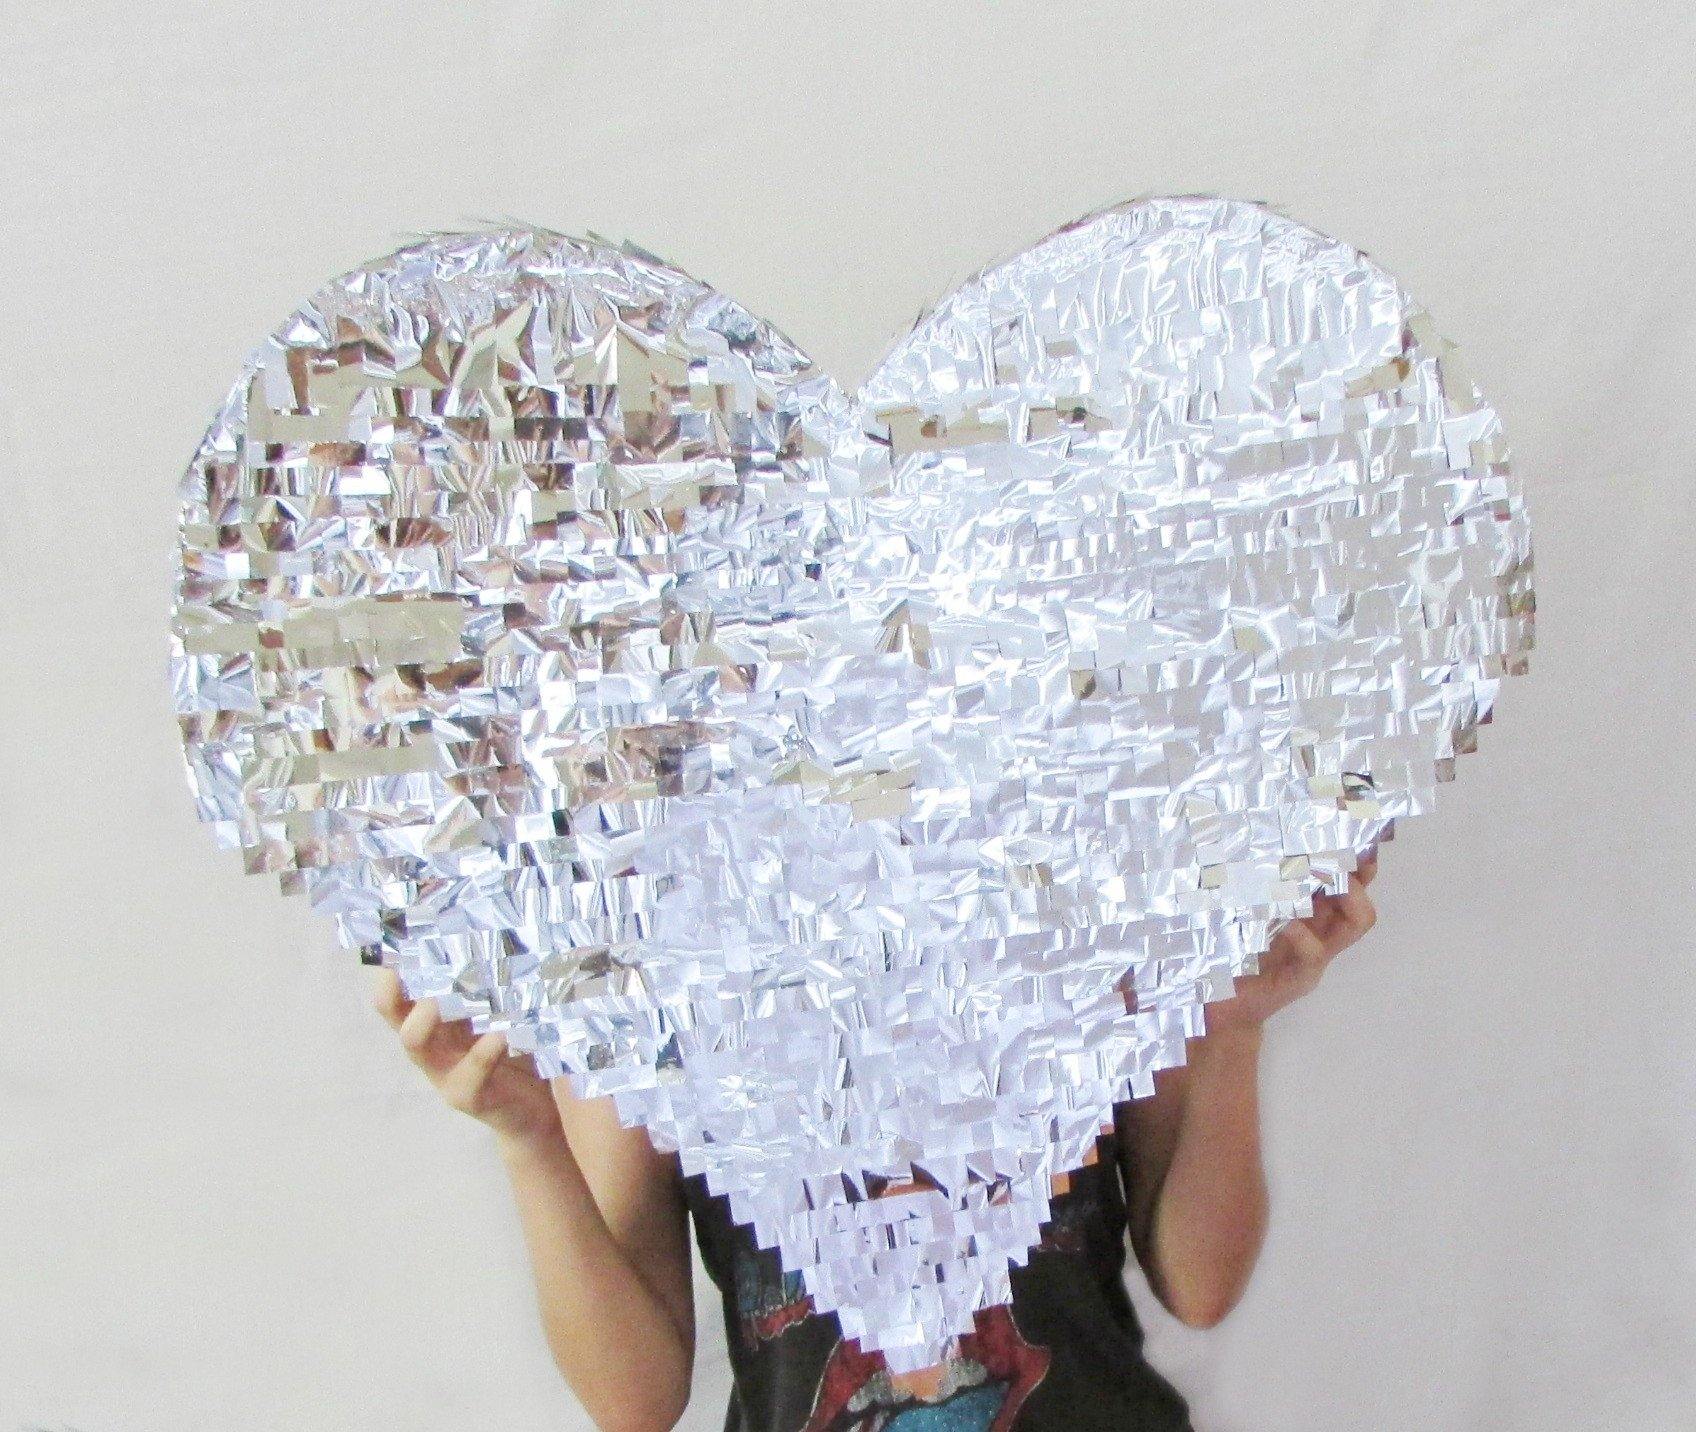 Silver Fringed Heart Piñata - Bickiboo Designs